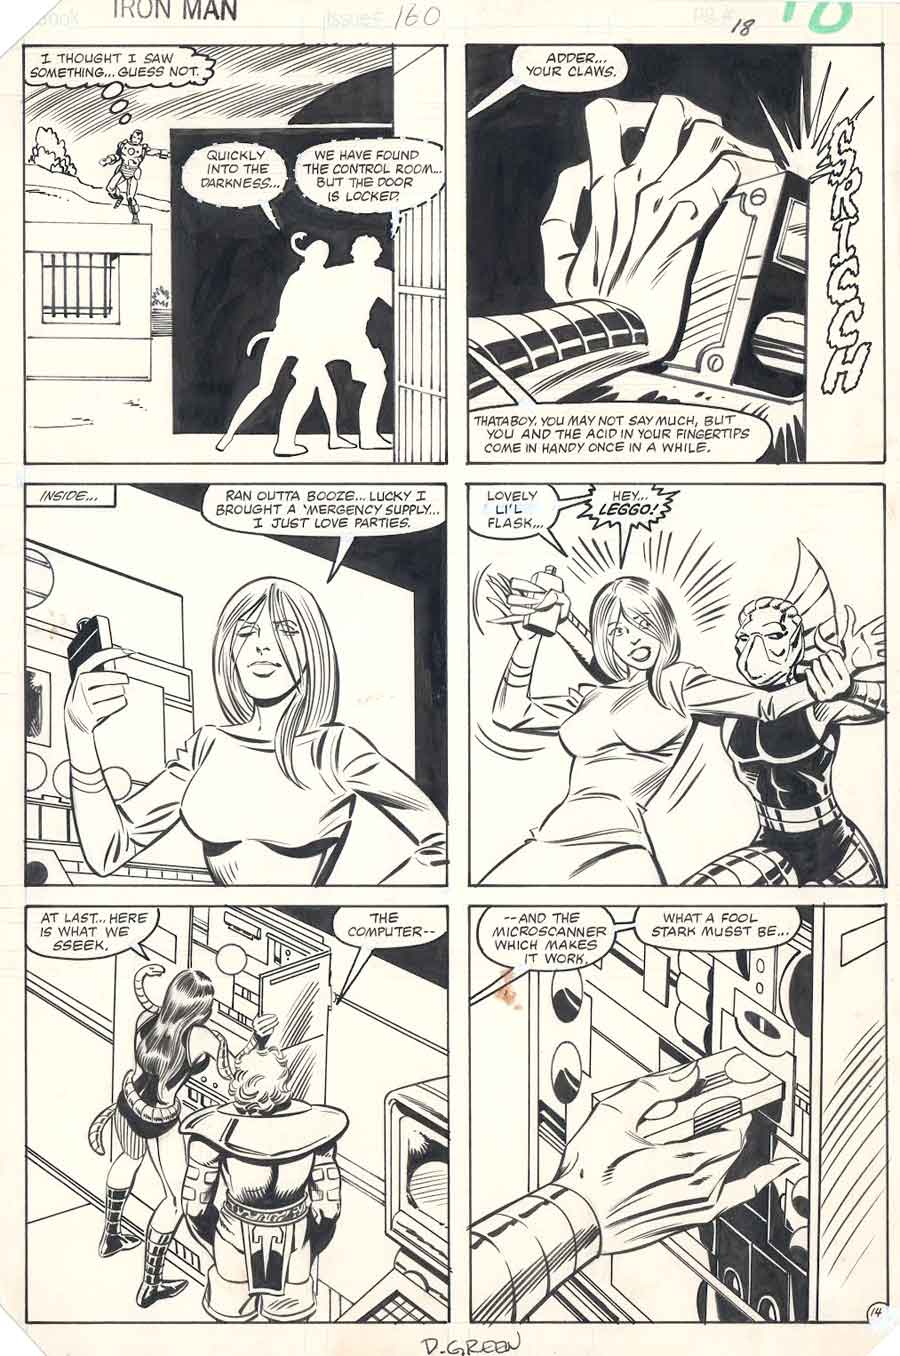 Steve Ditko original 1980s marvel comic book page artwork - Iron Man #160